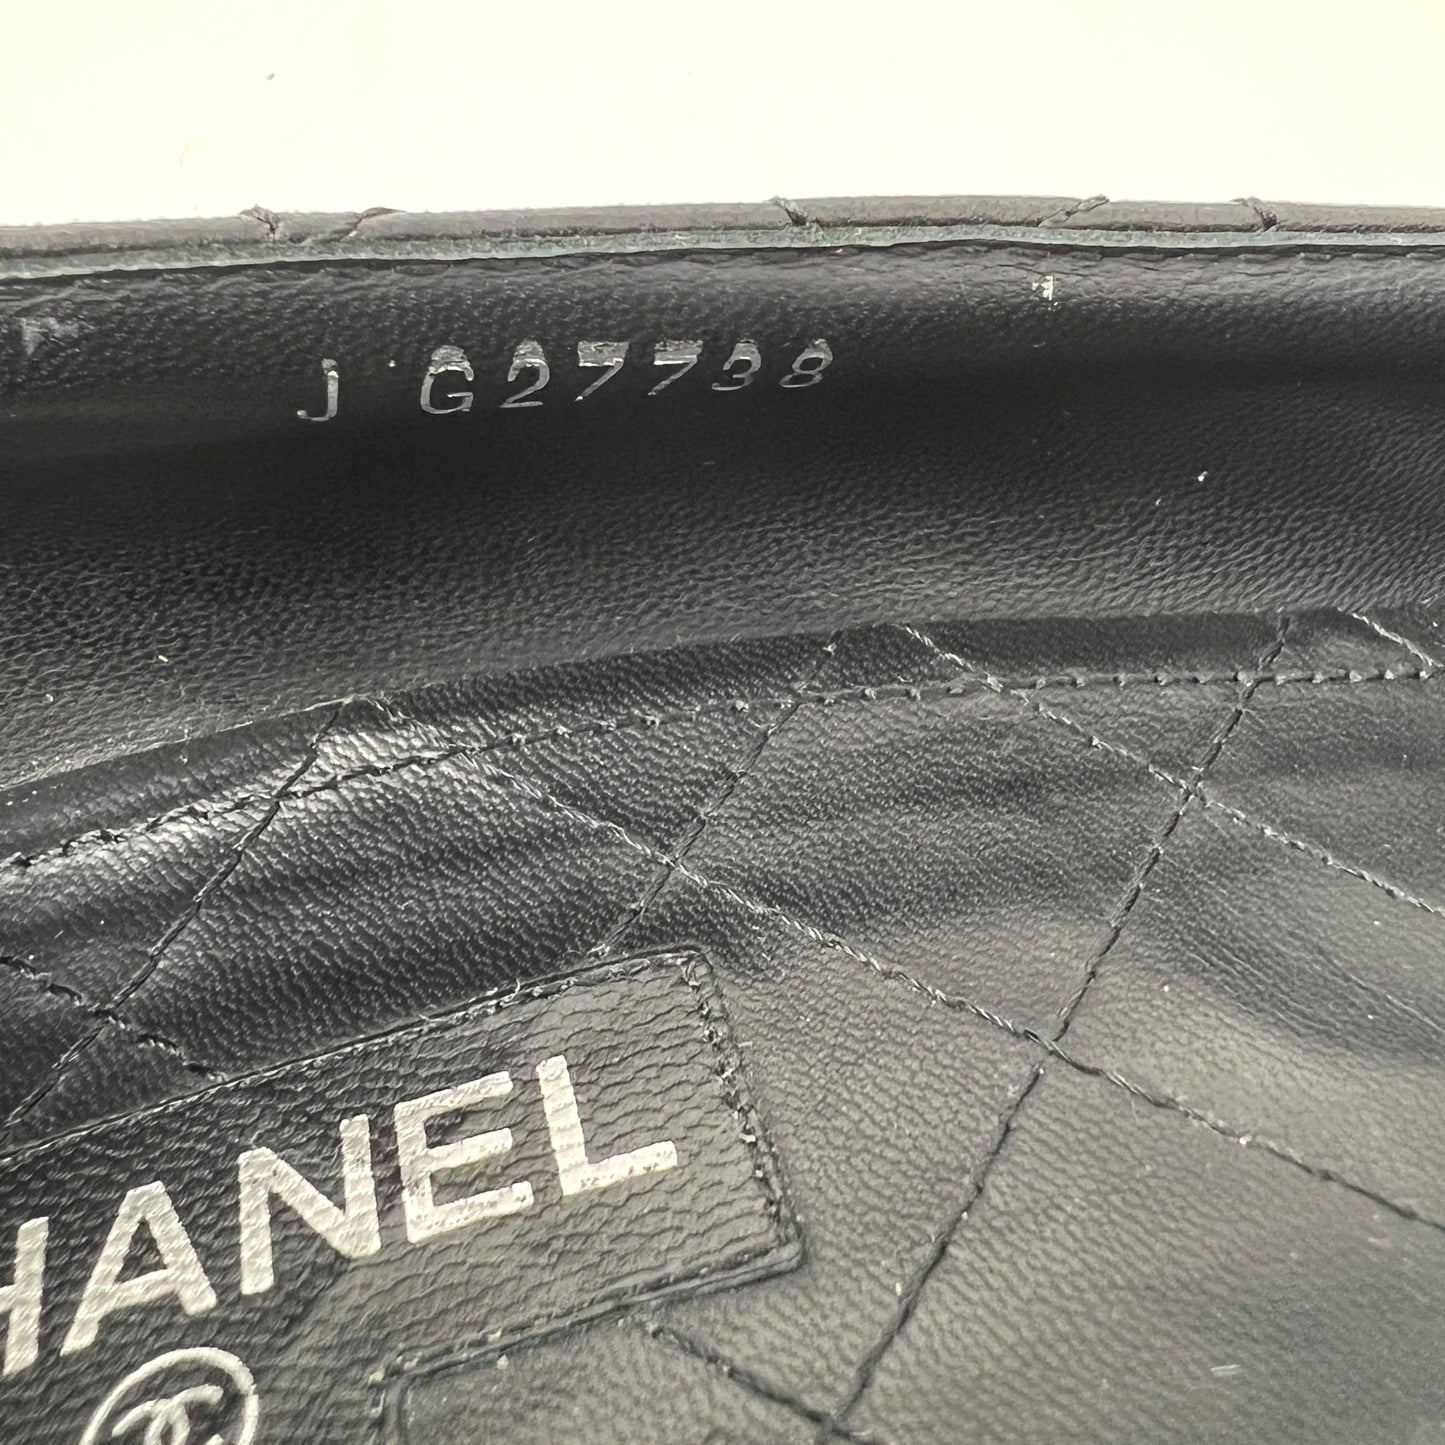 Chanel Black Quilted Matelasse Leather Interlocking Turn Lock Logo Loafer Pumps Size EU 41